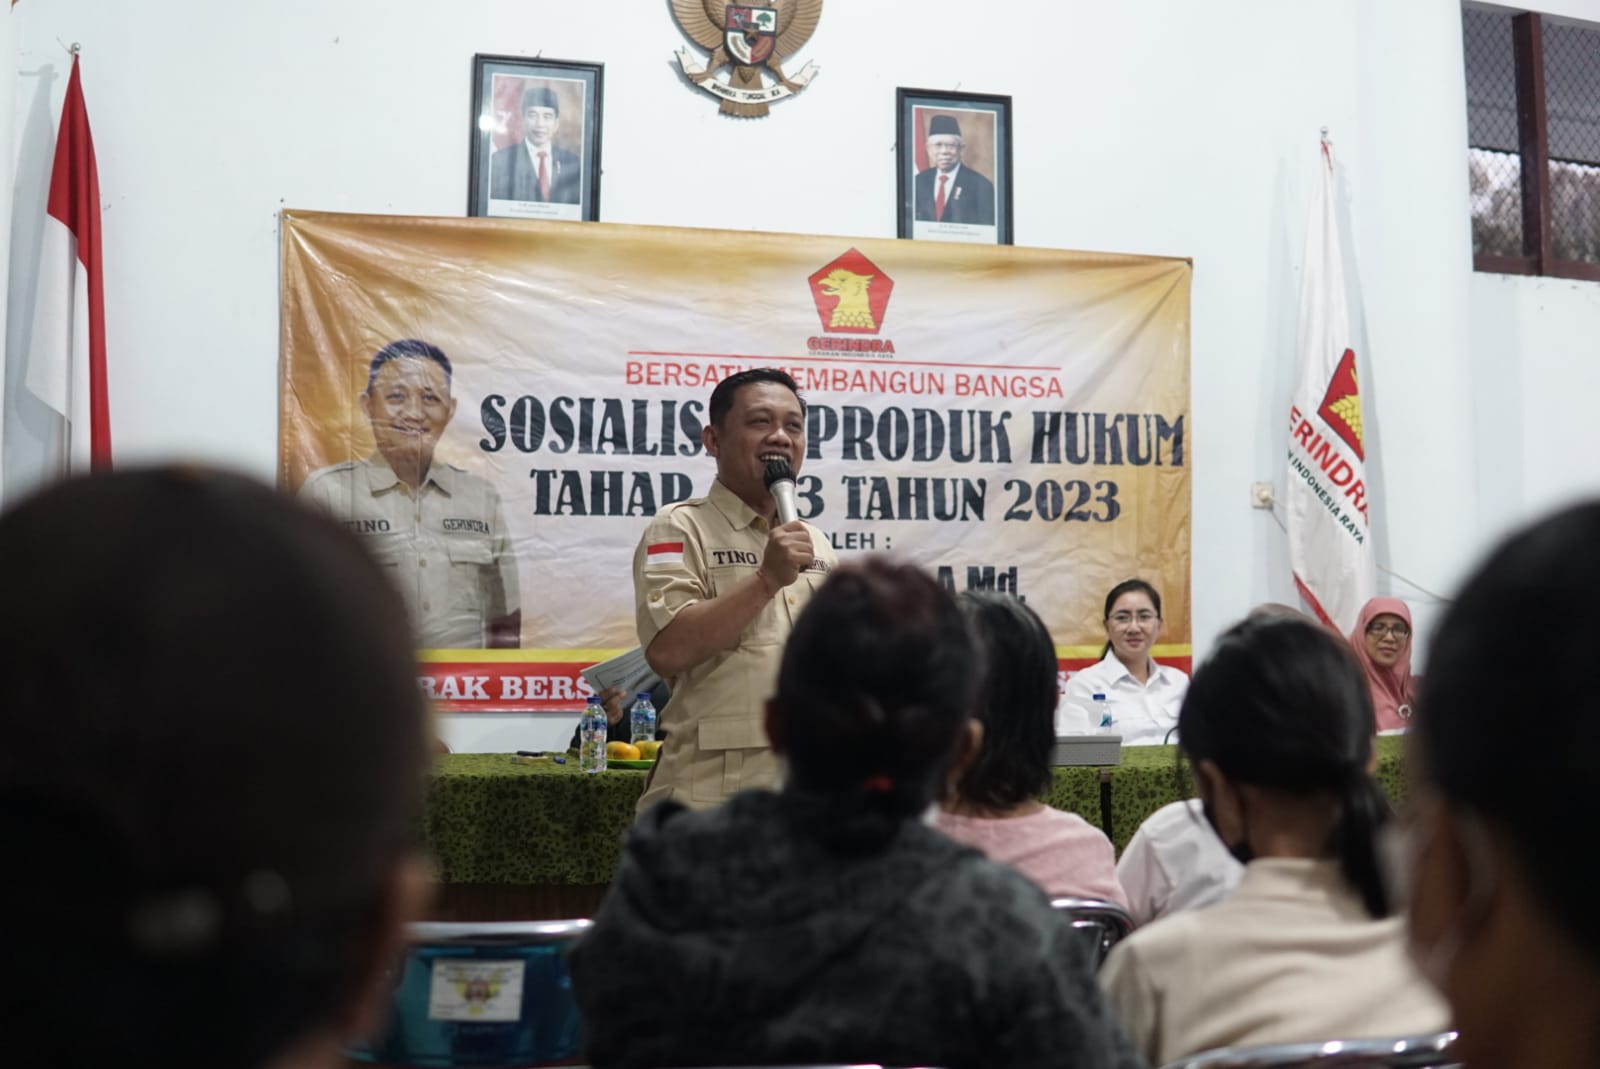 Wakil Ketua DPRD Kota Kediri Katino A.Md, Gelar Sosialisasi Produk Hukum di Kelurahan Pakelan